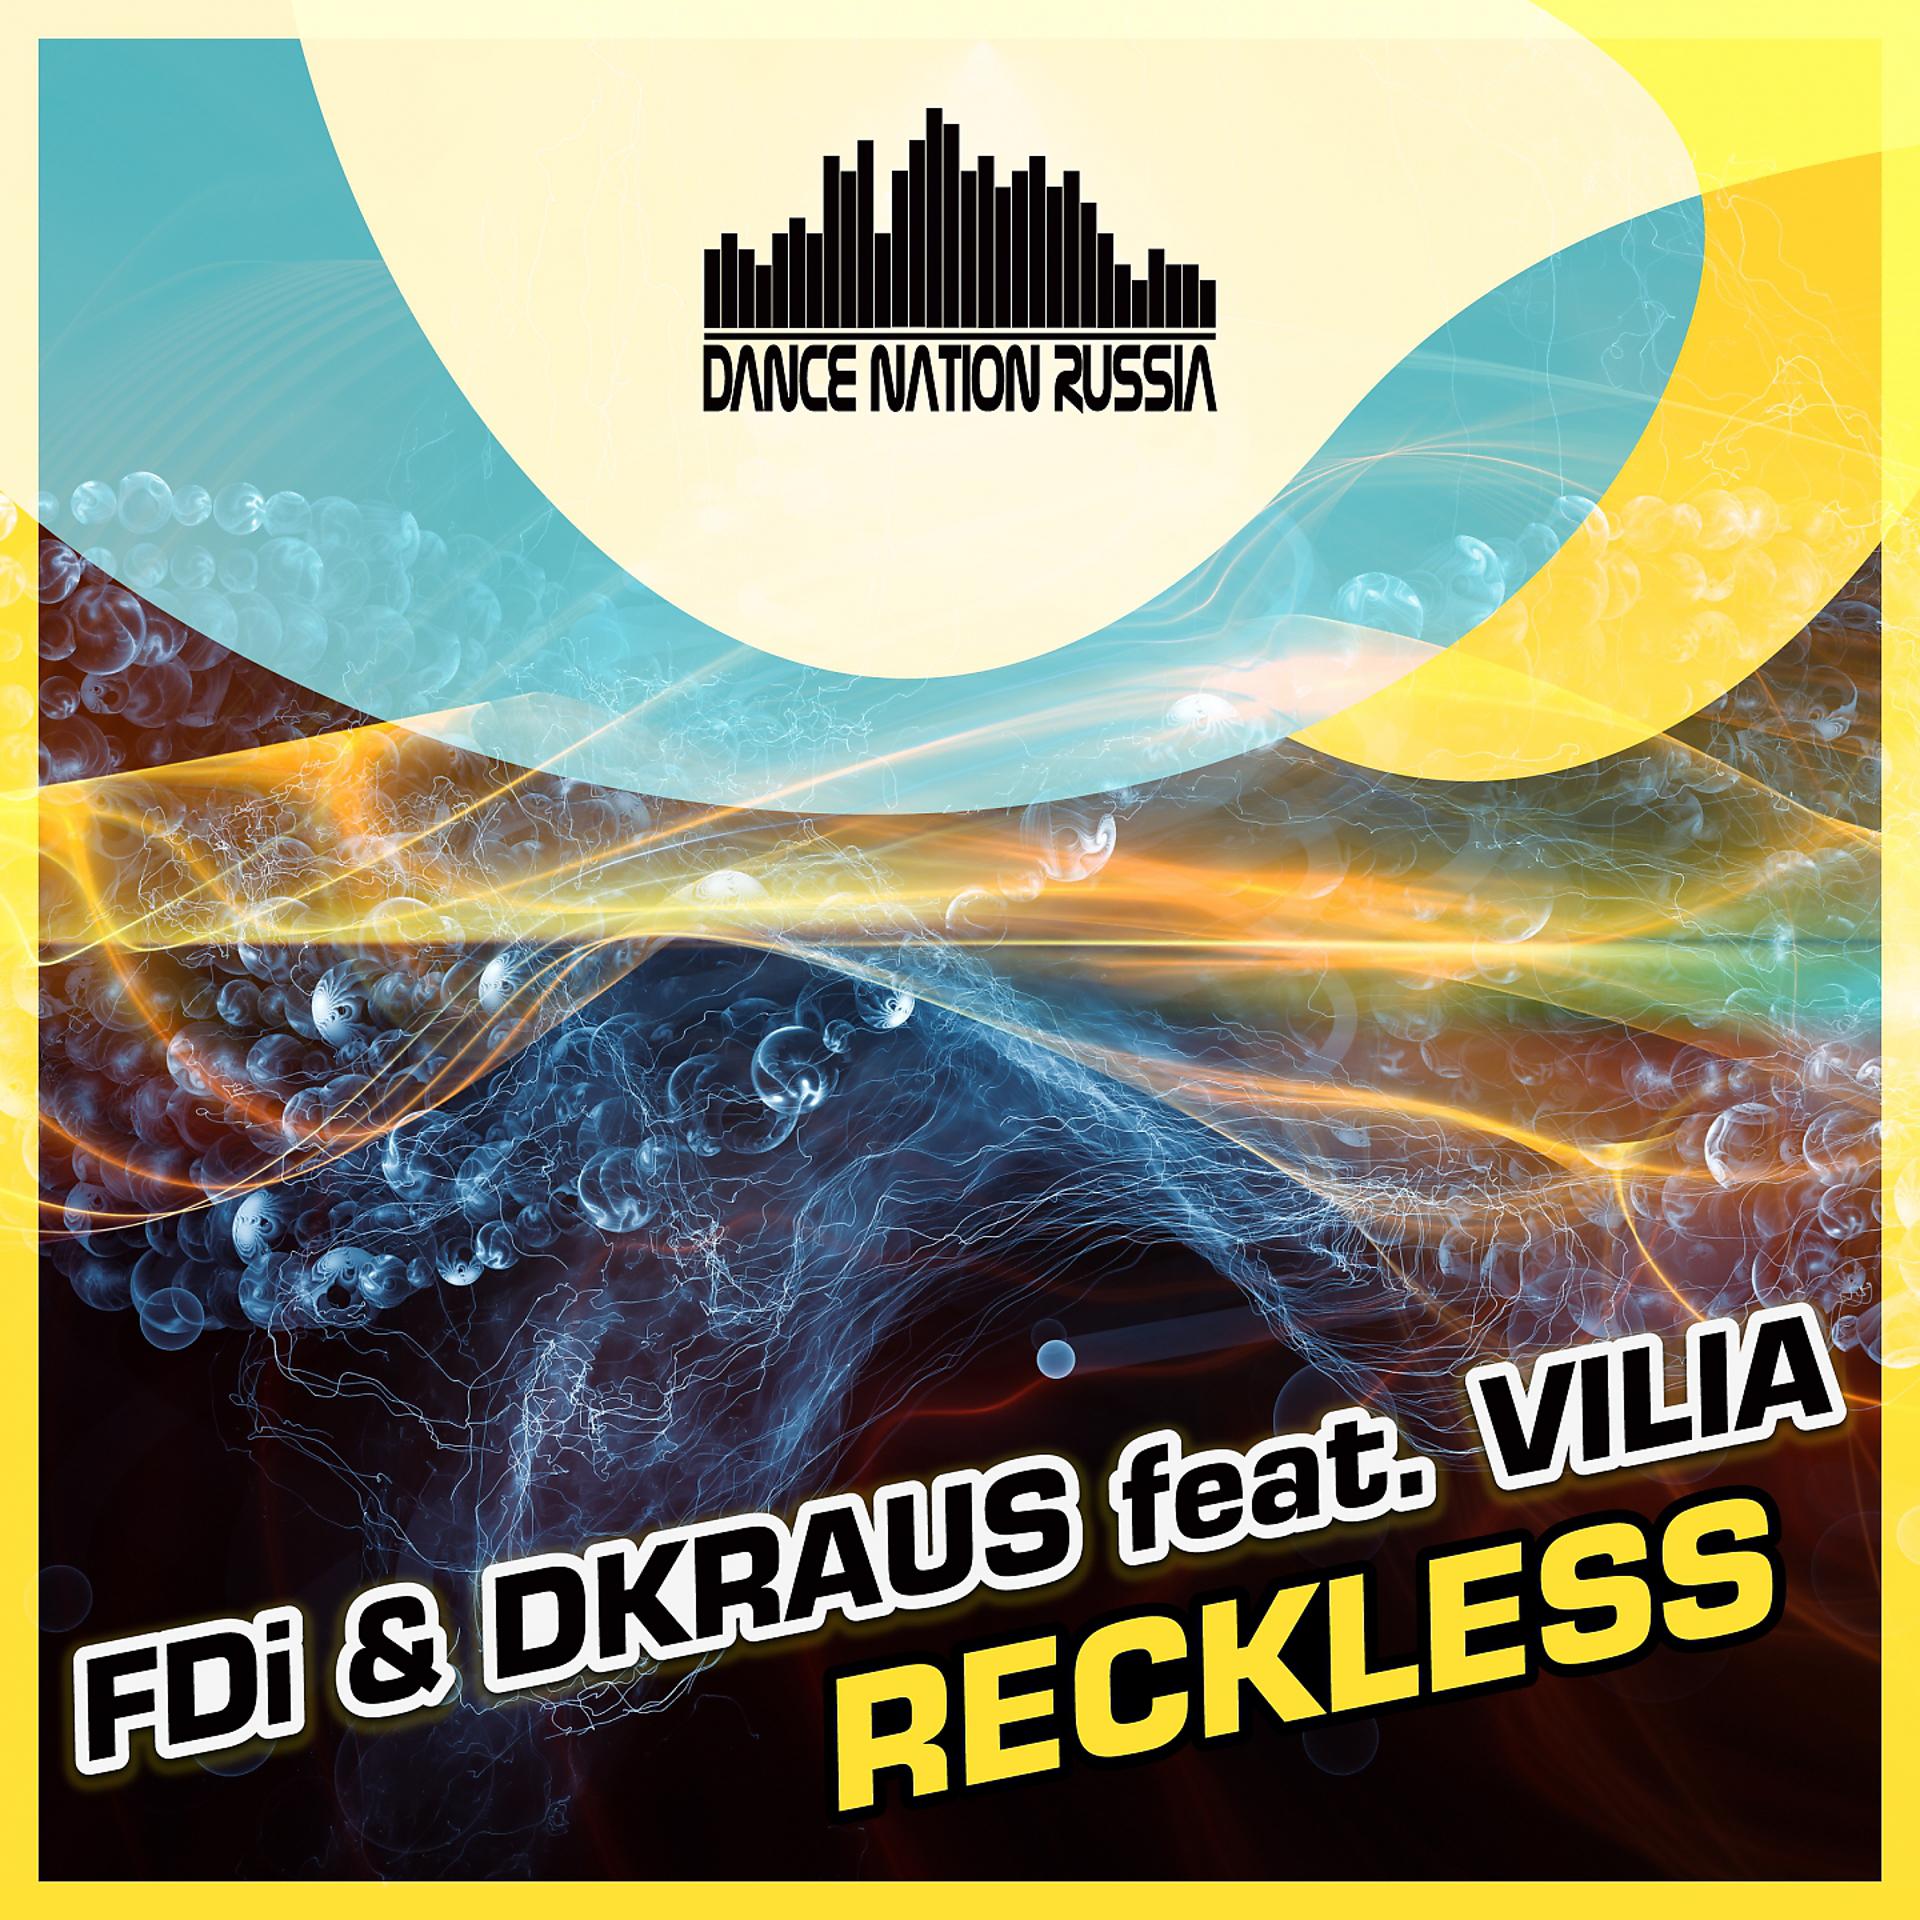 Постер к треку FDI, DKraus, VILIA - Reckless